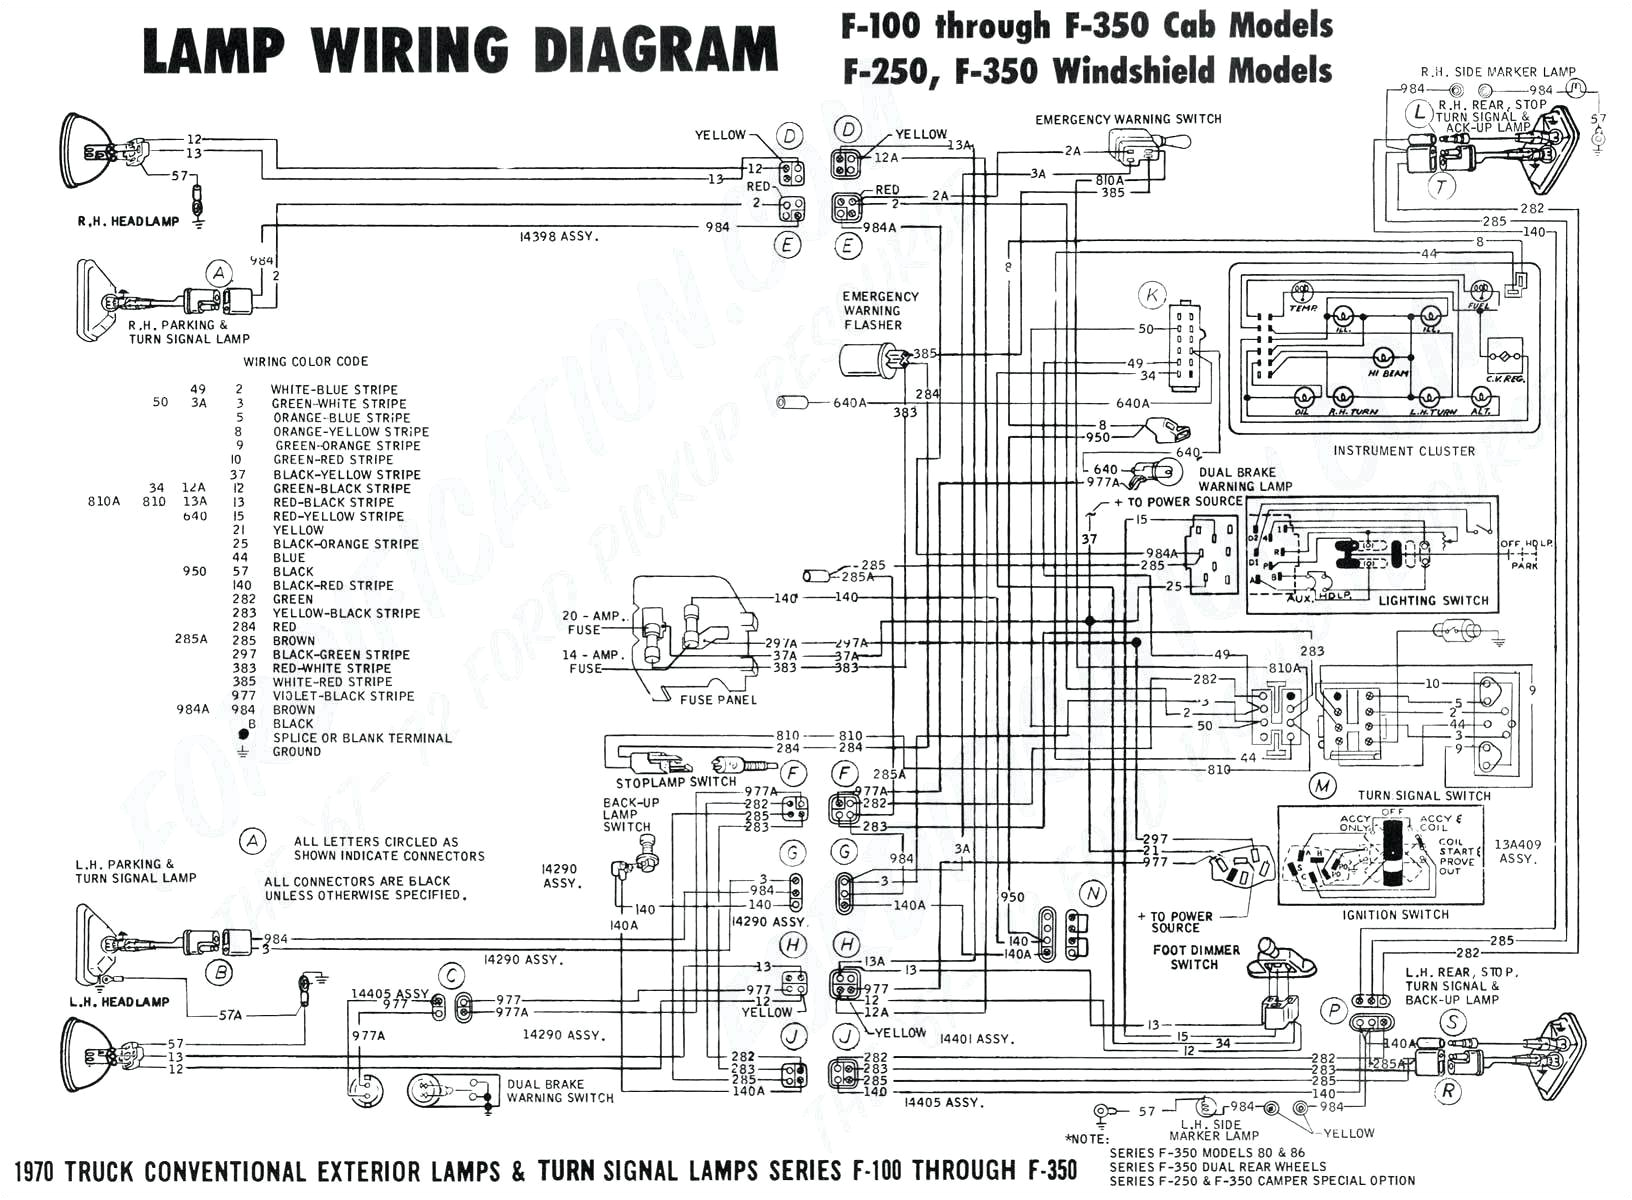 thread wiring harness problems book diagram schema 2006 dodge dakota wiring harness problems dodge dakota wiring harness problems